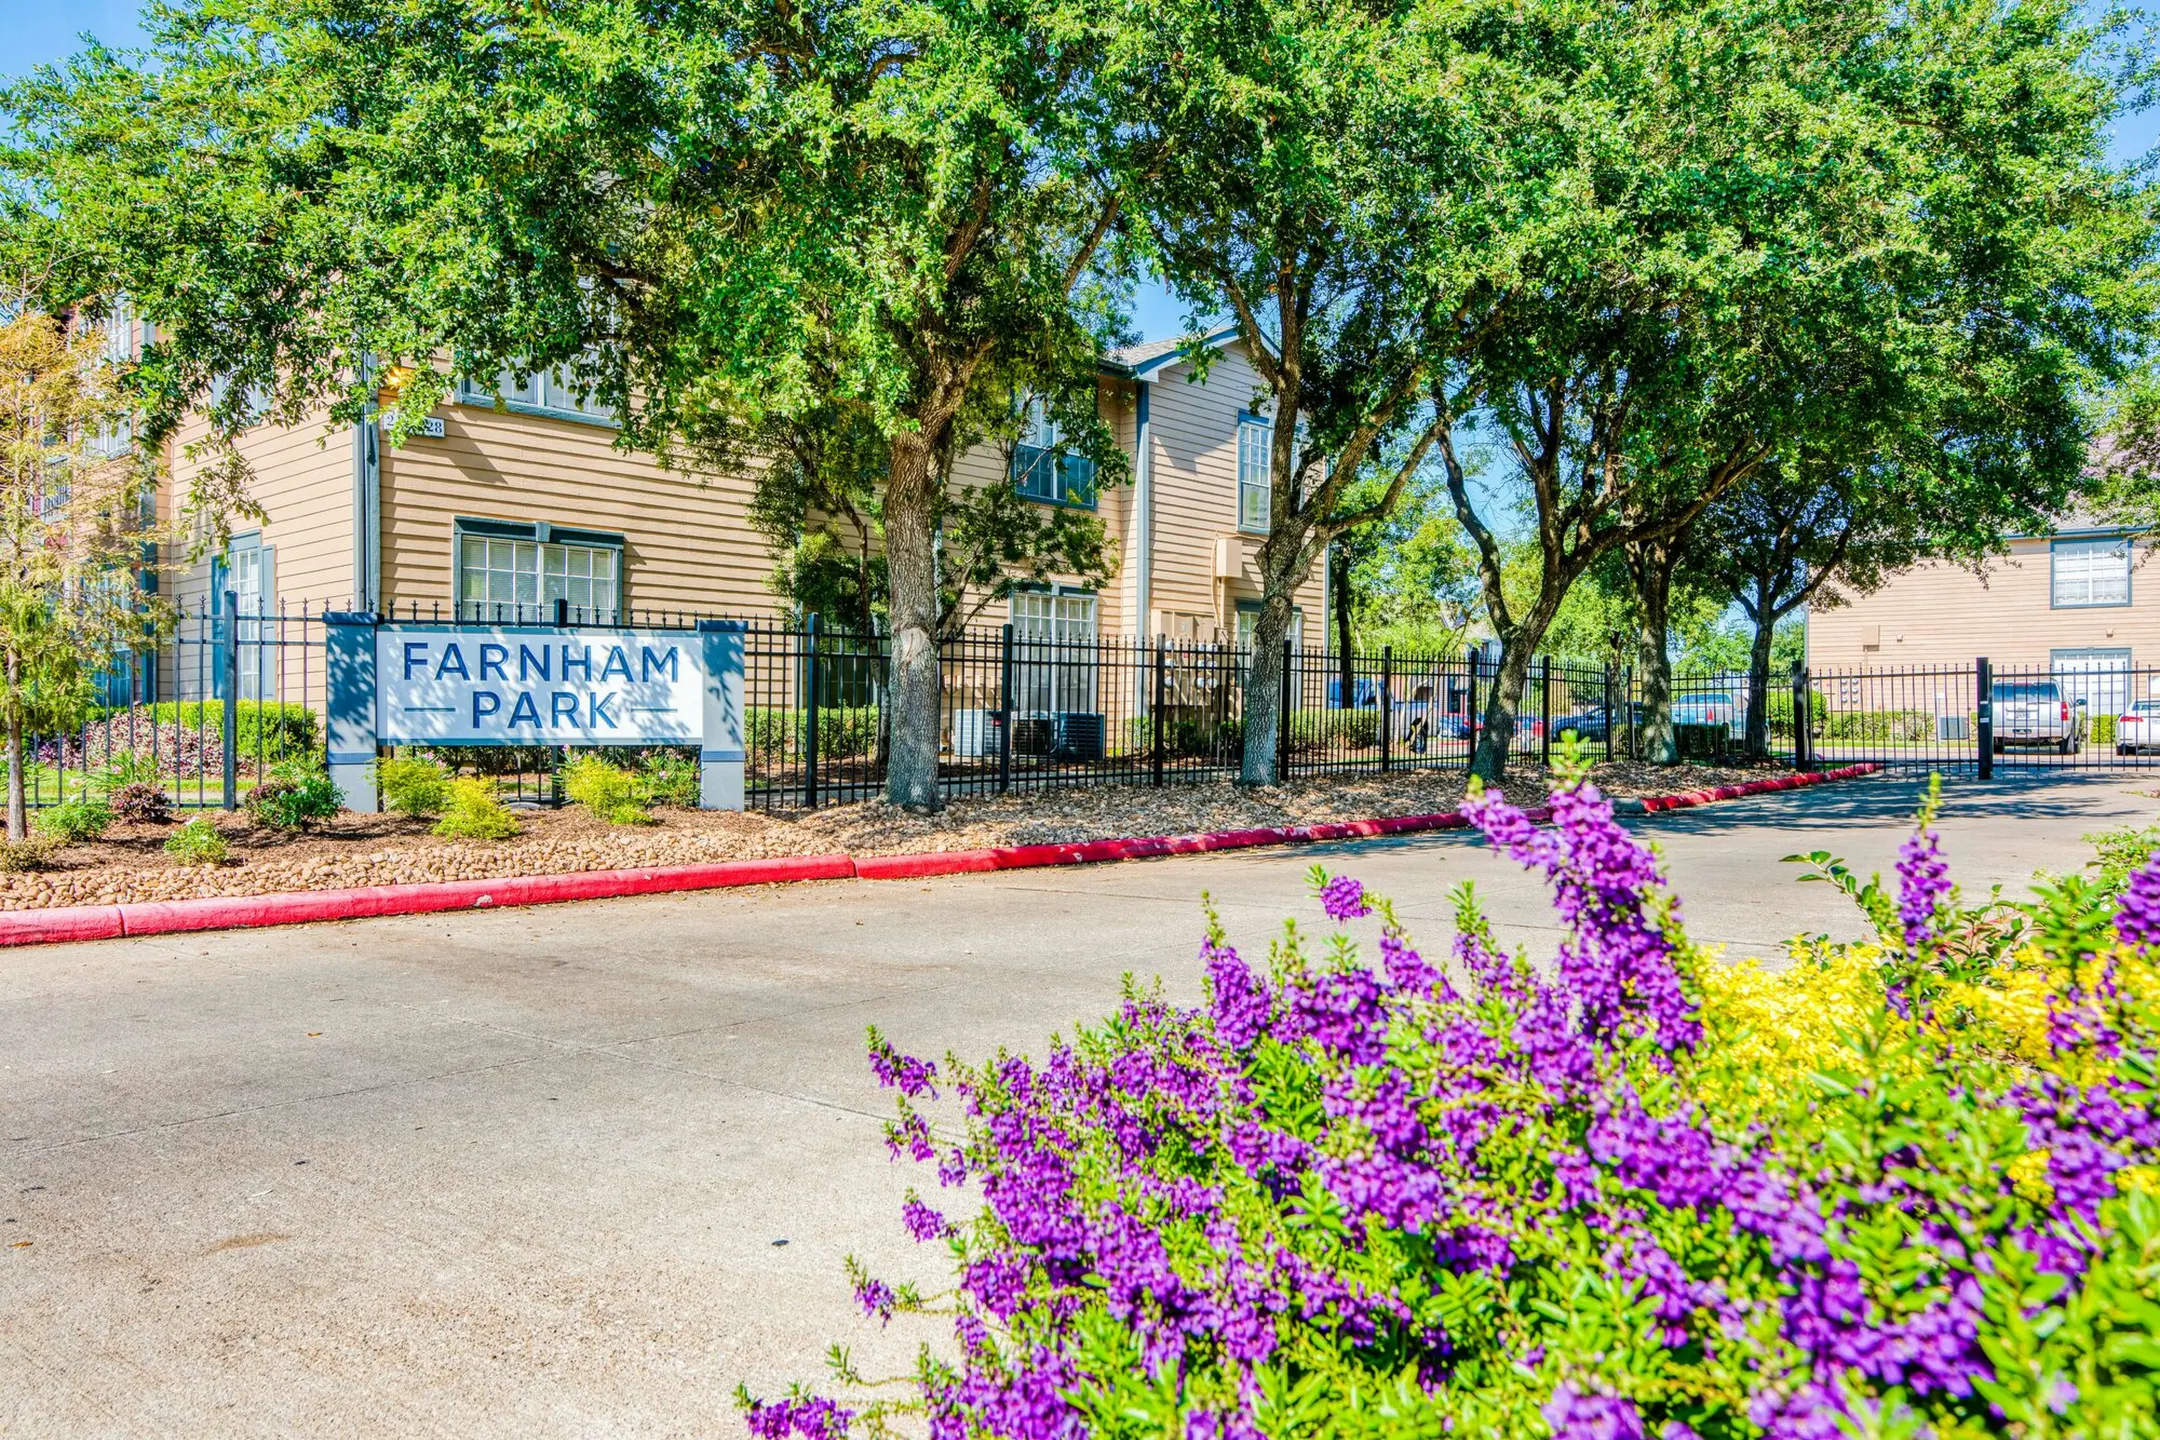 Farnham Park Apartments - Port Arthur, TX